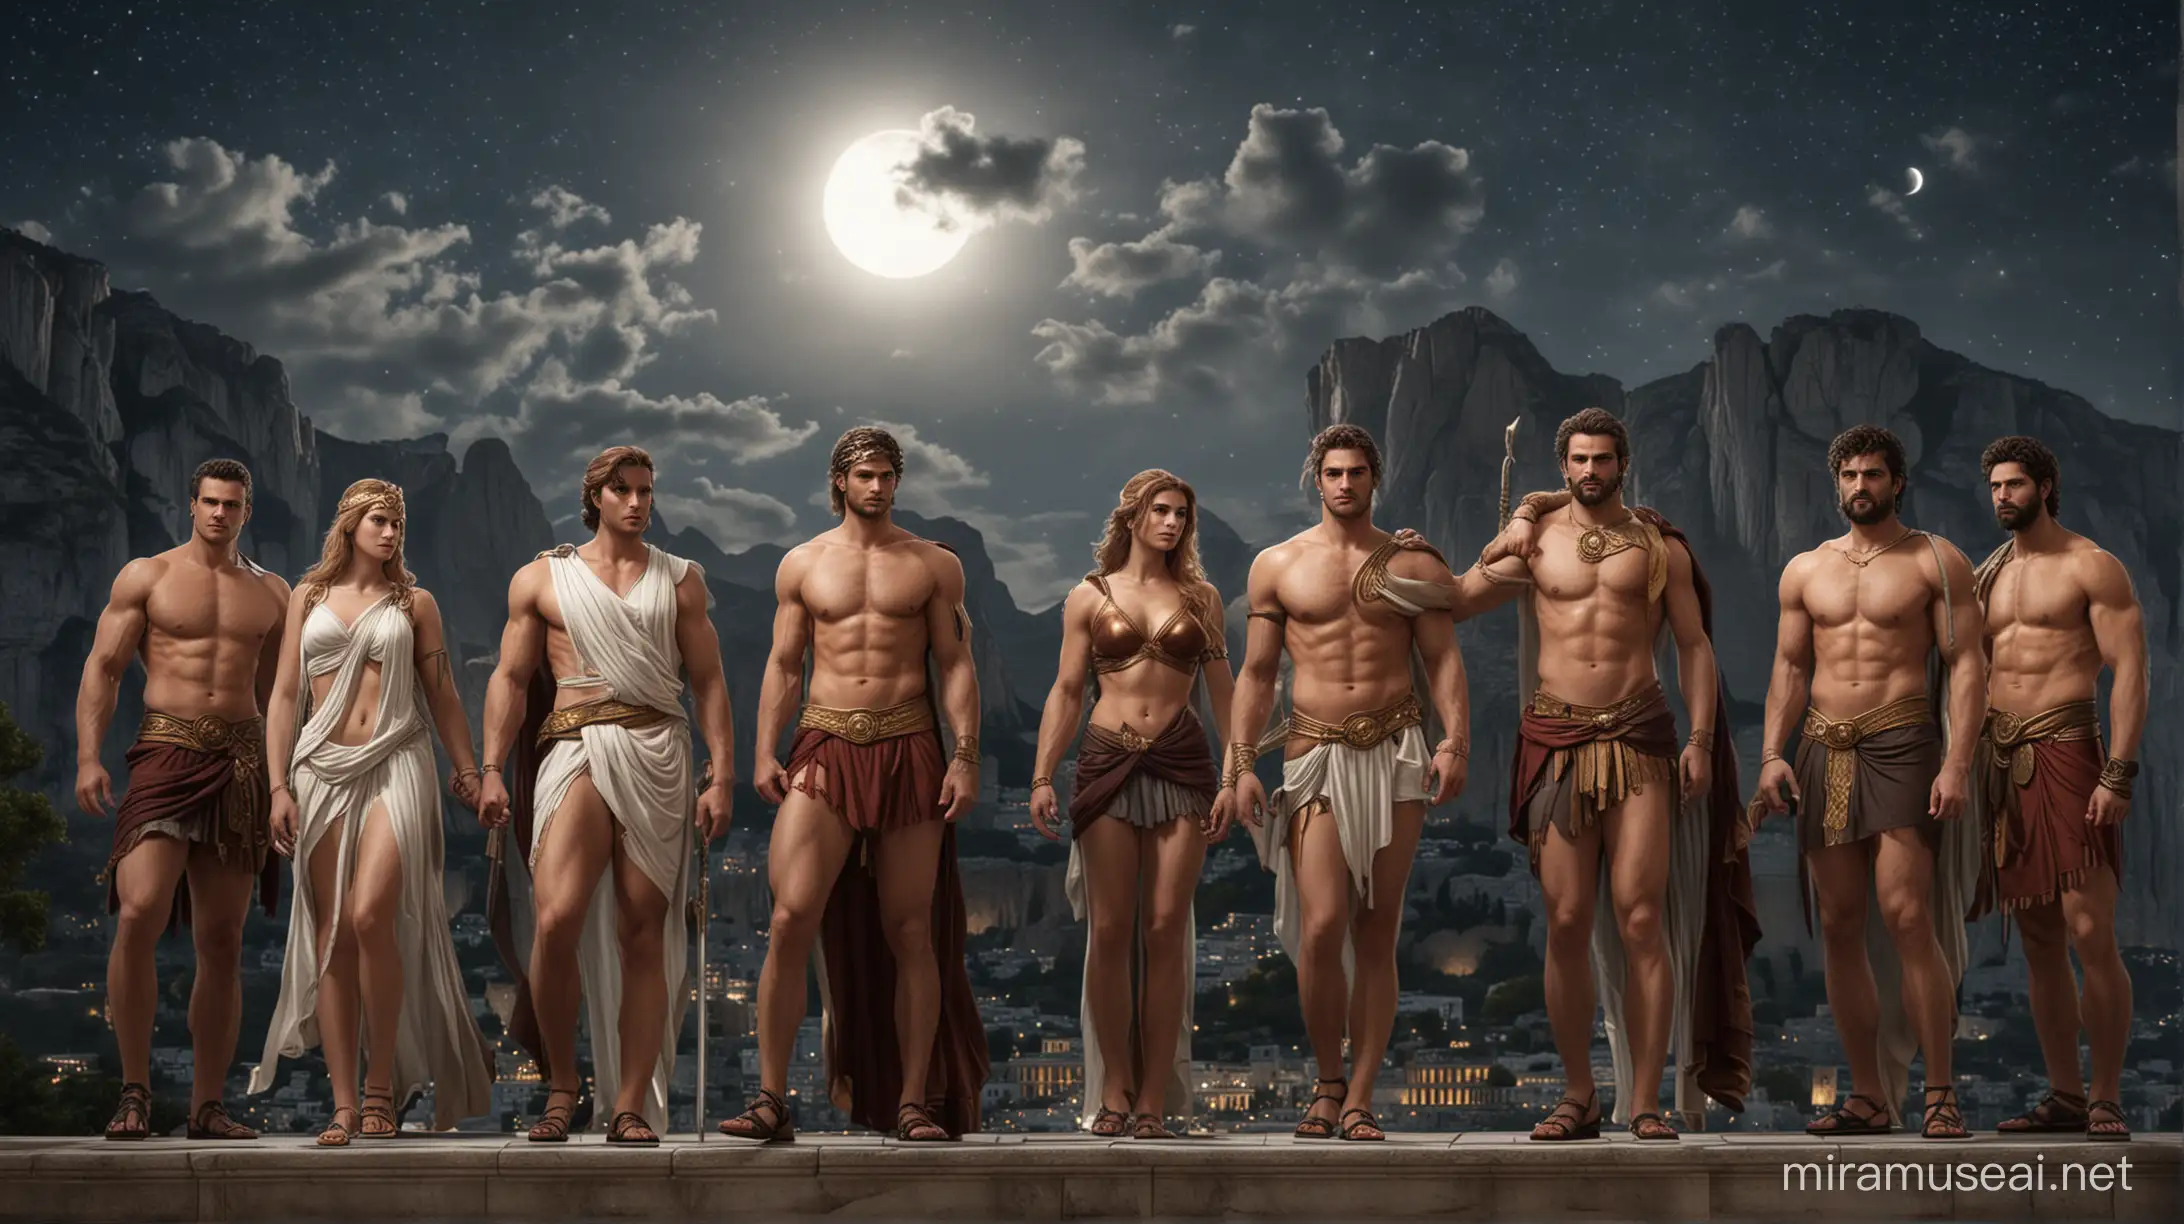 Greek Deities Assembled at Olympus Palace under Moonlit Sky